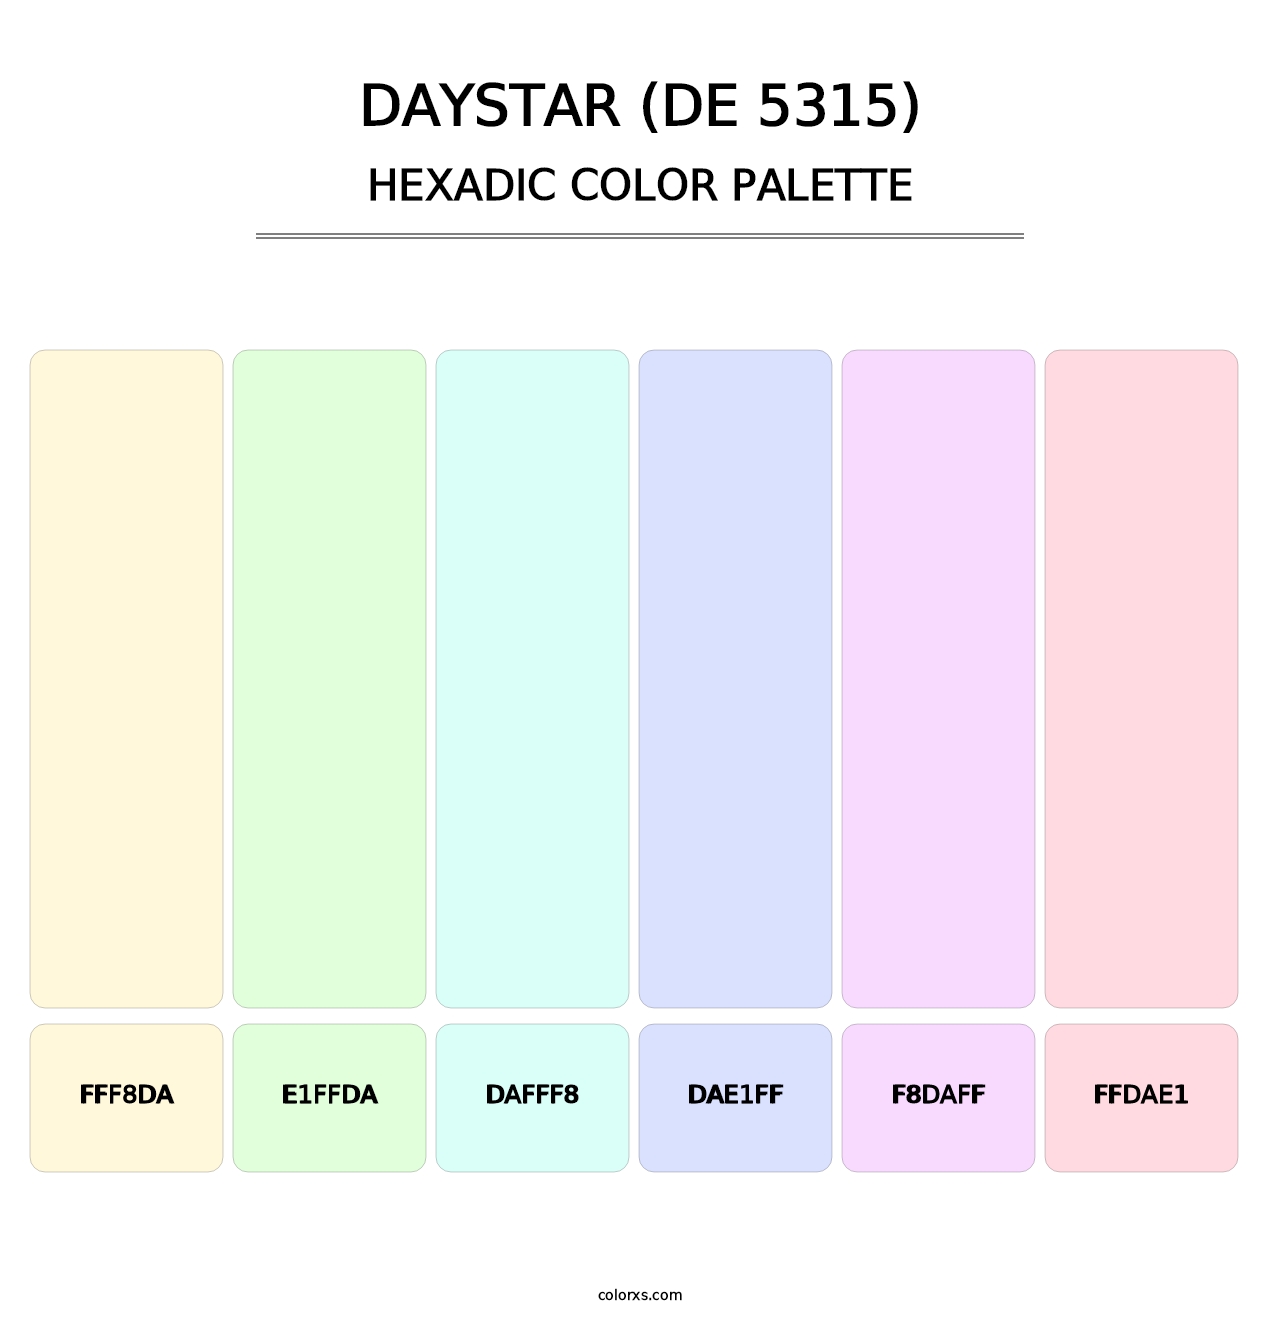 Daystar (DE 5315) - Hexadic Color Palette